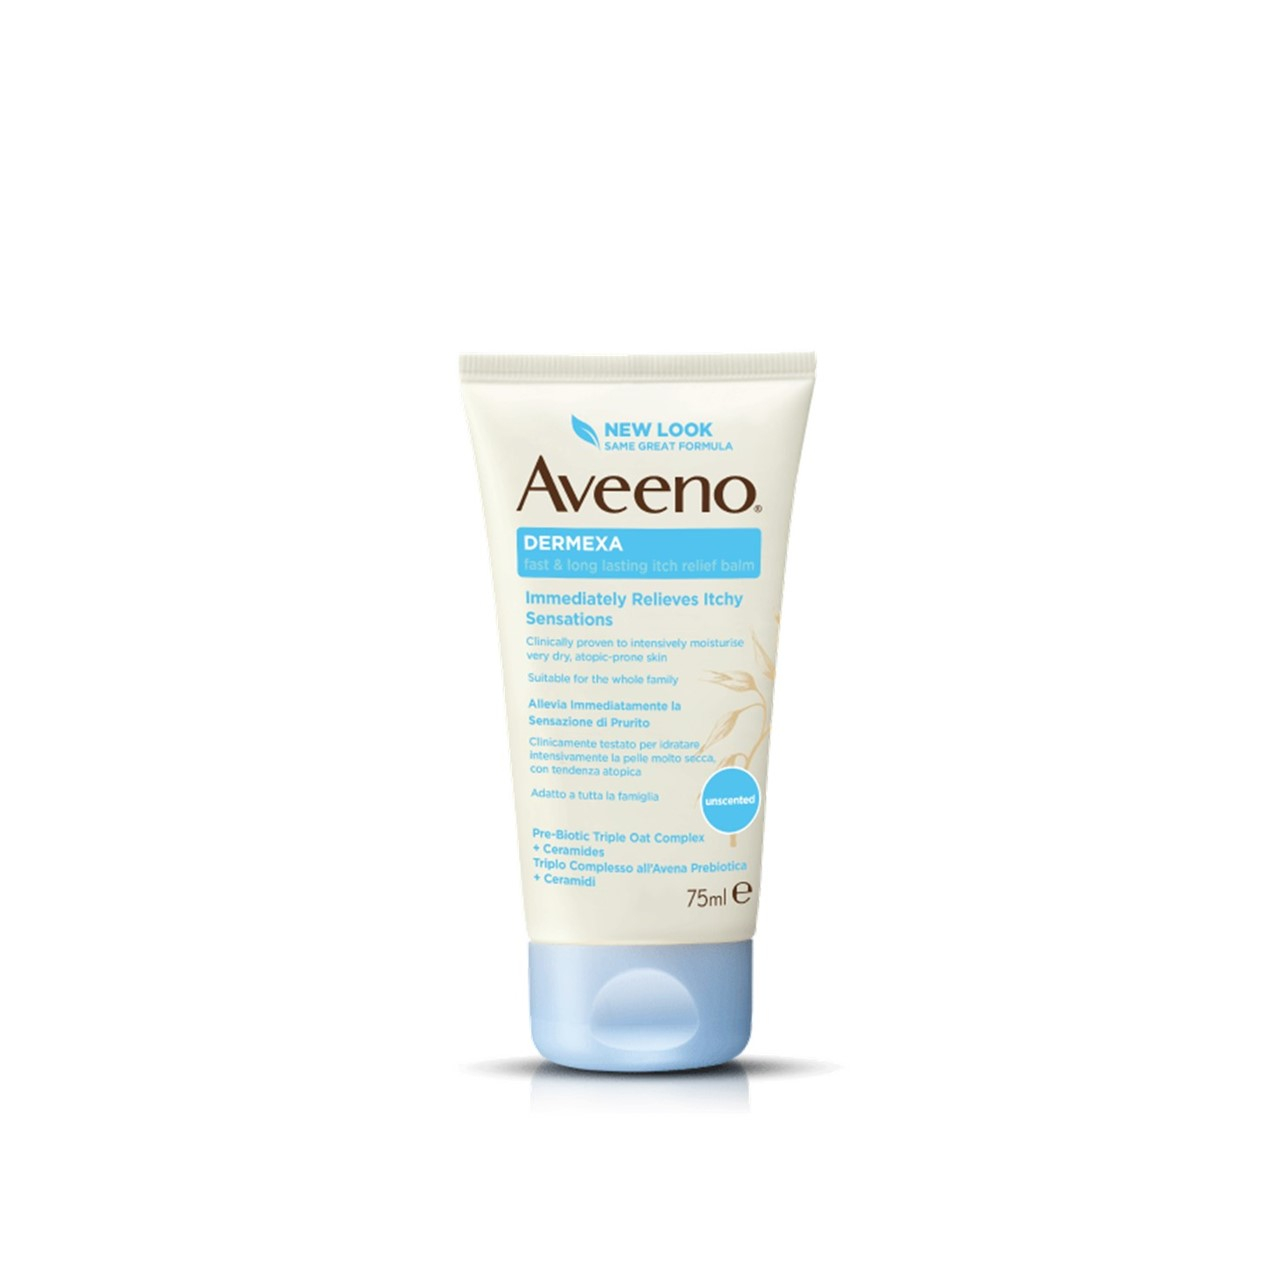 Aveeno Dermexa Fast & Long Lasting Itch Relief Balm 75ml (2.54fl oz)